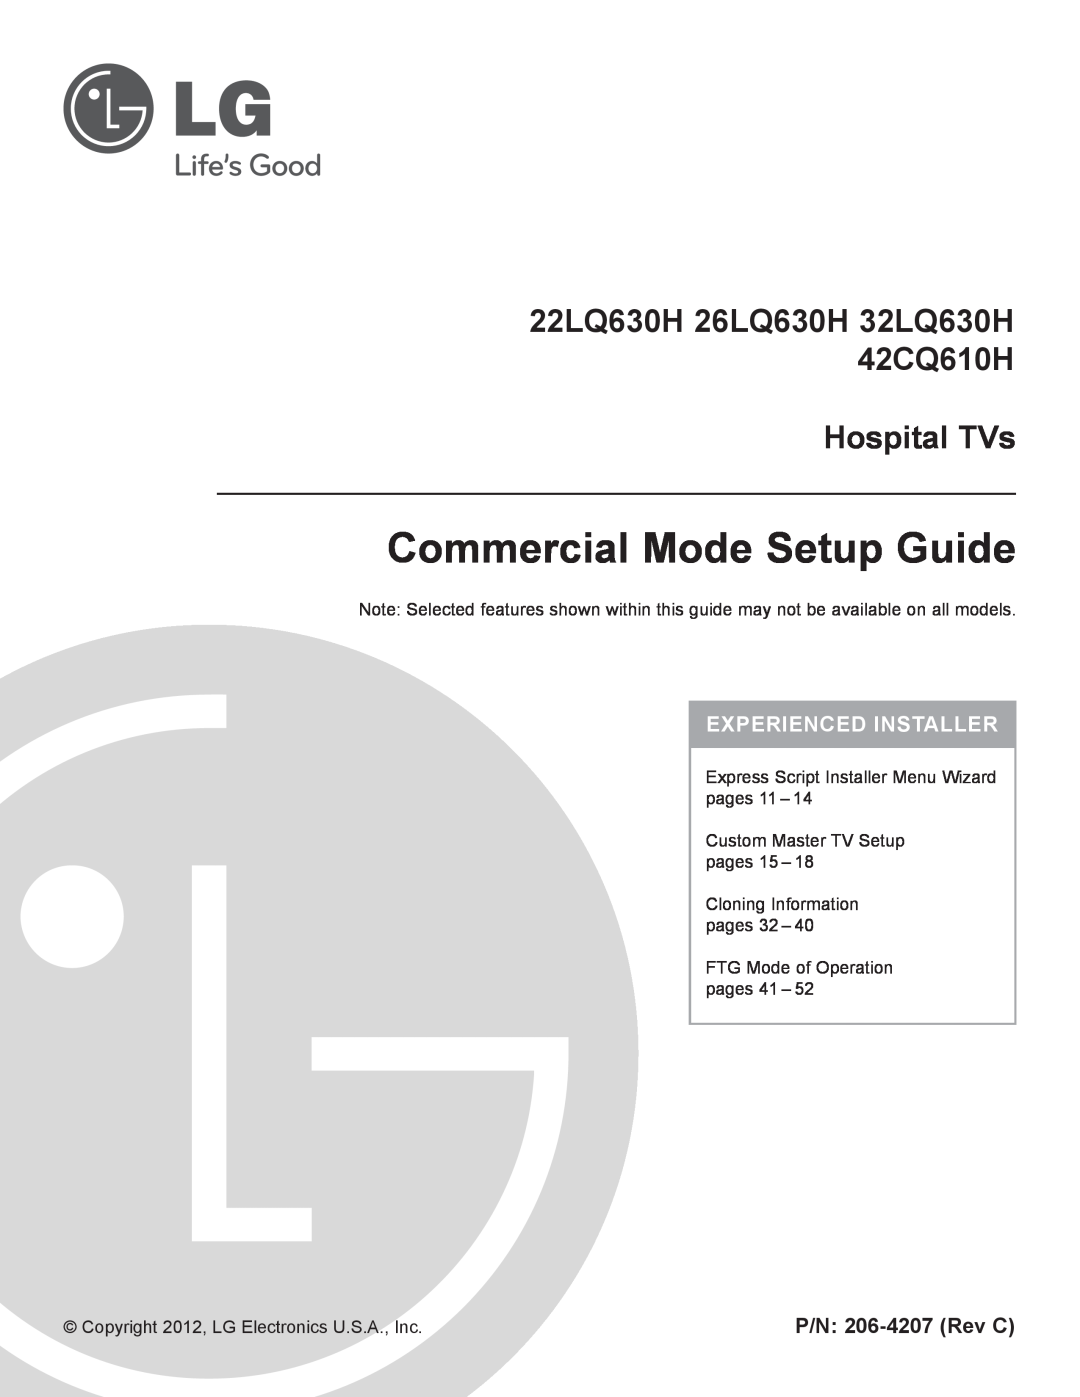 LG Electronics Commercial Mode Setup Guide, 22LQ630H 26LQ630H 32LQ630H 42CQ610H Hospital TVs, Experienced Installer 